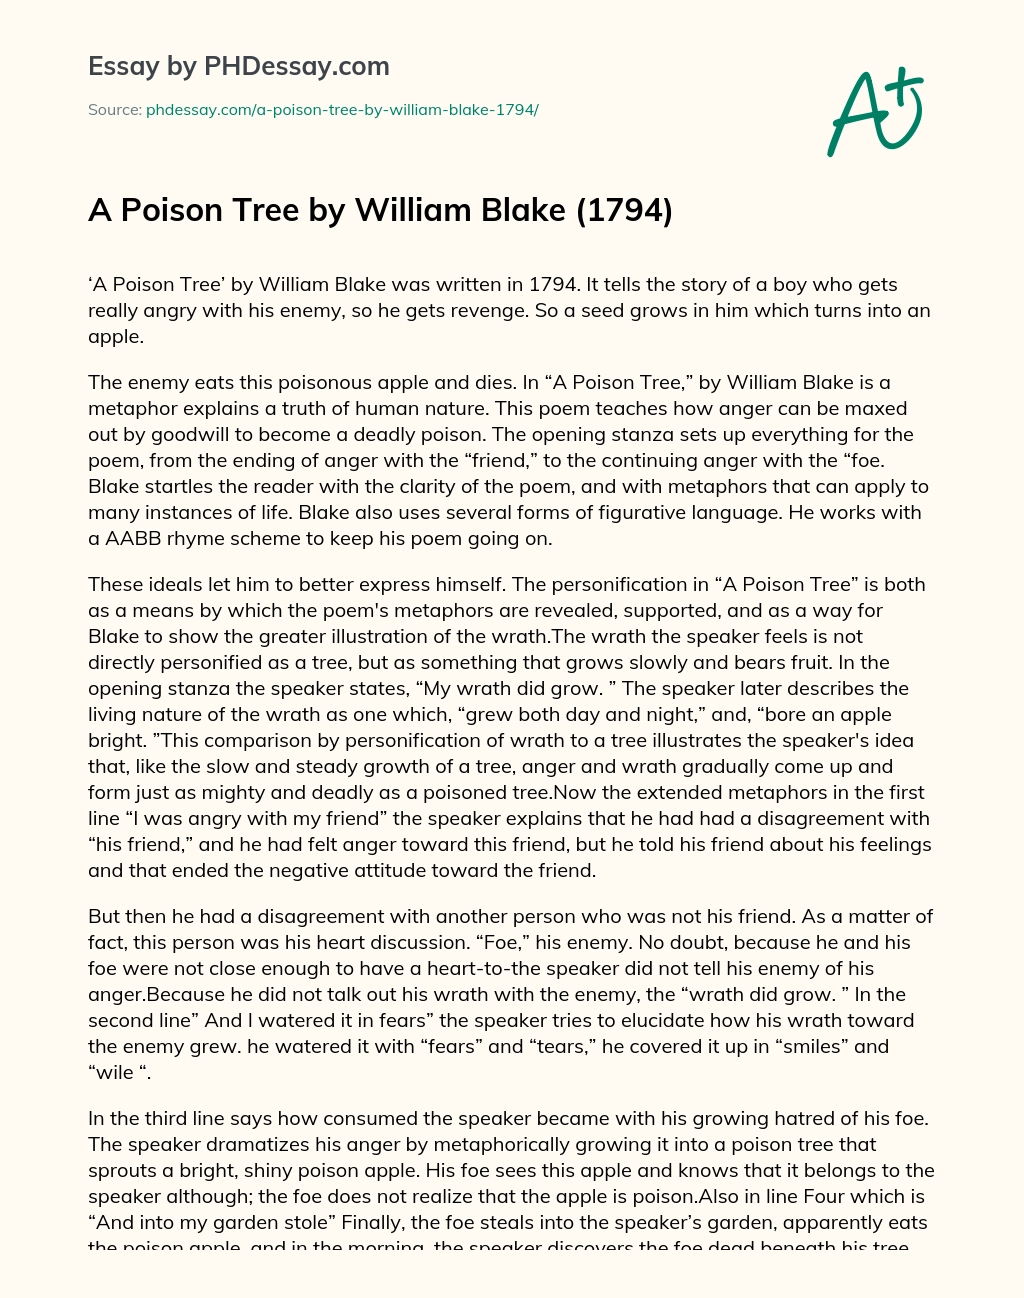 A Poison Tree by William Blake (1794) essay